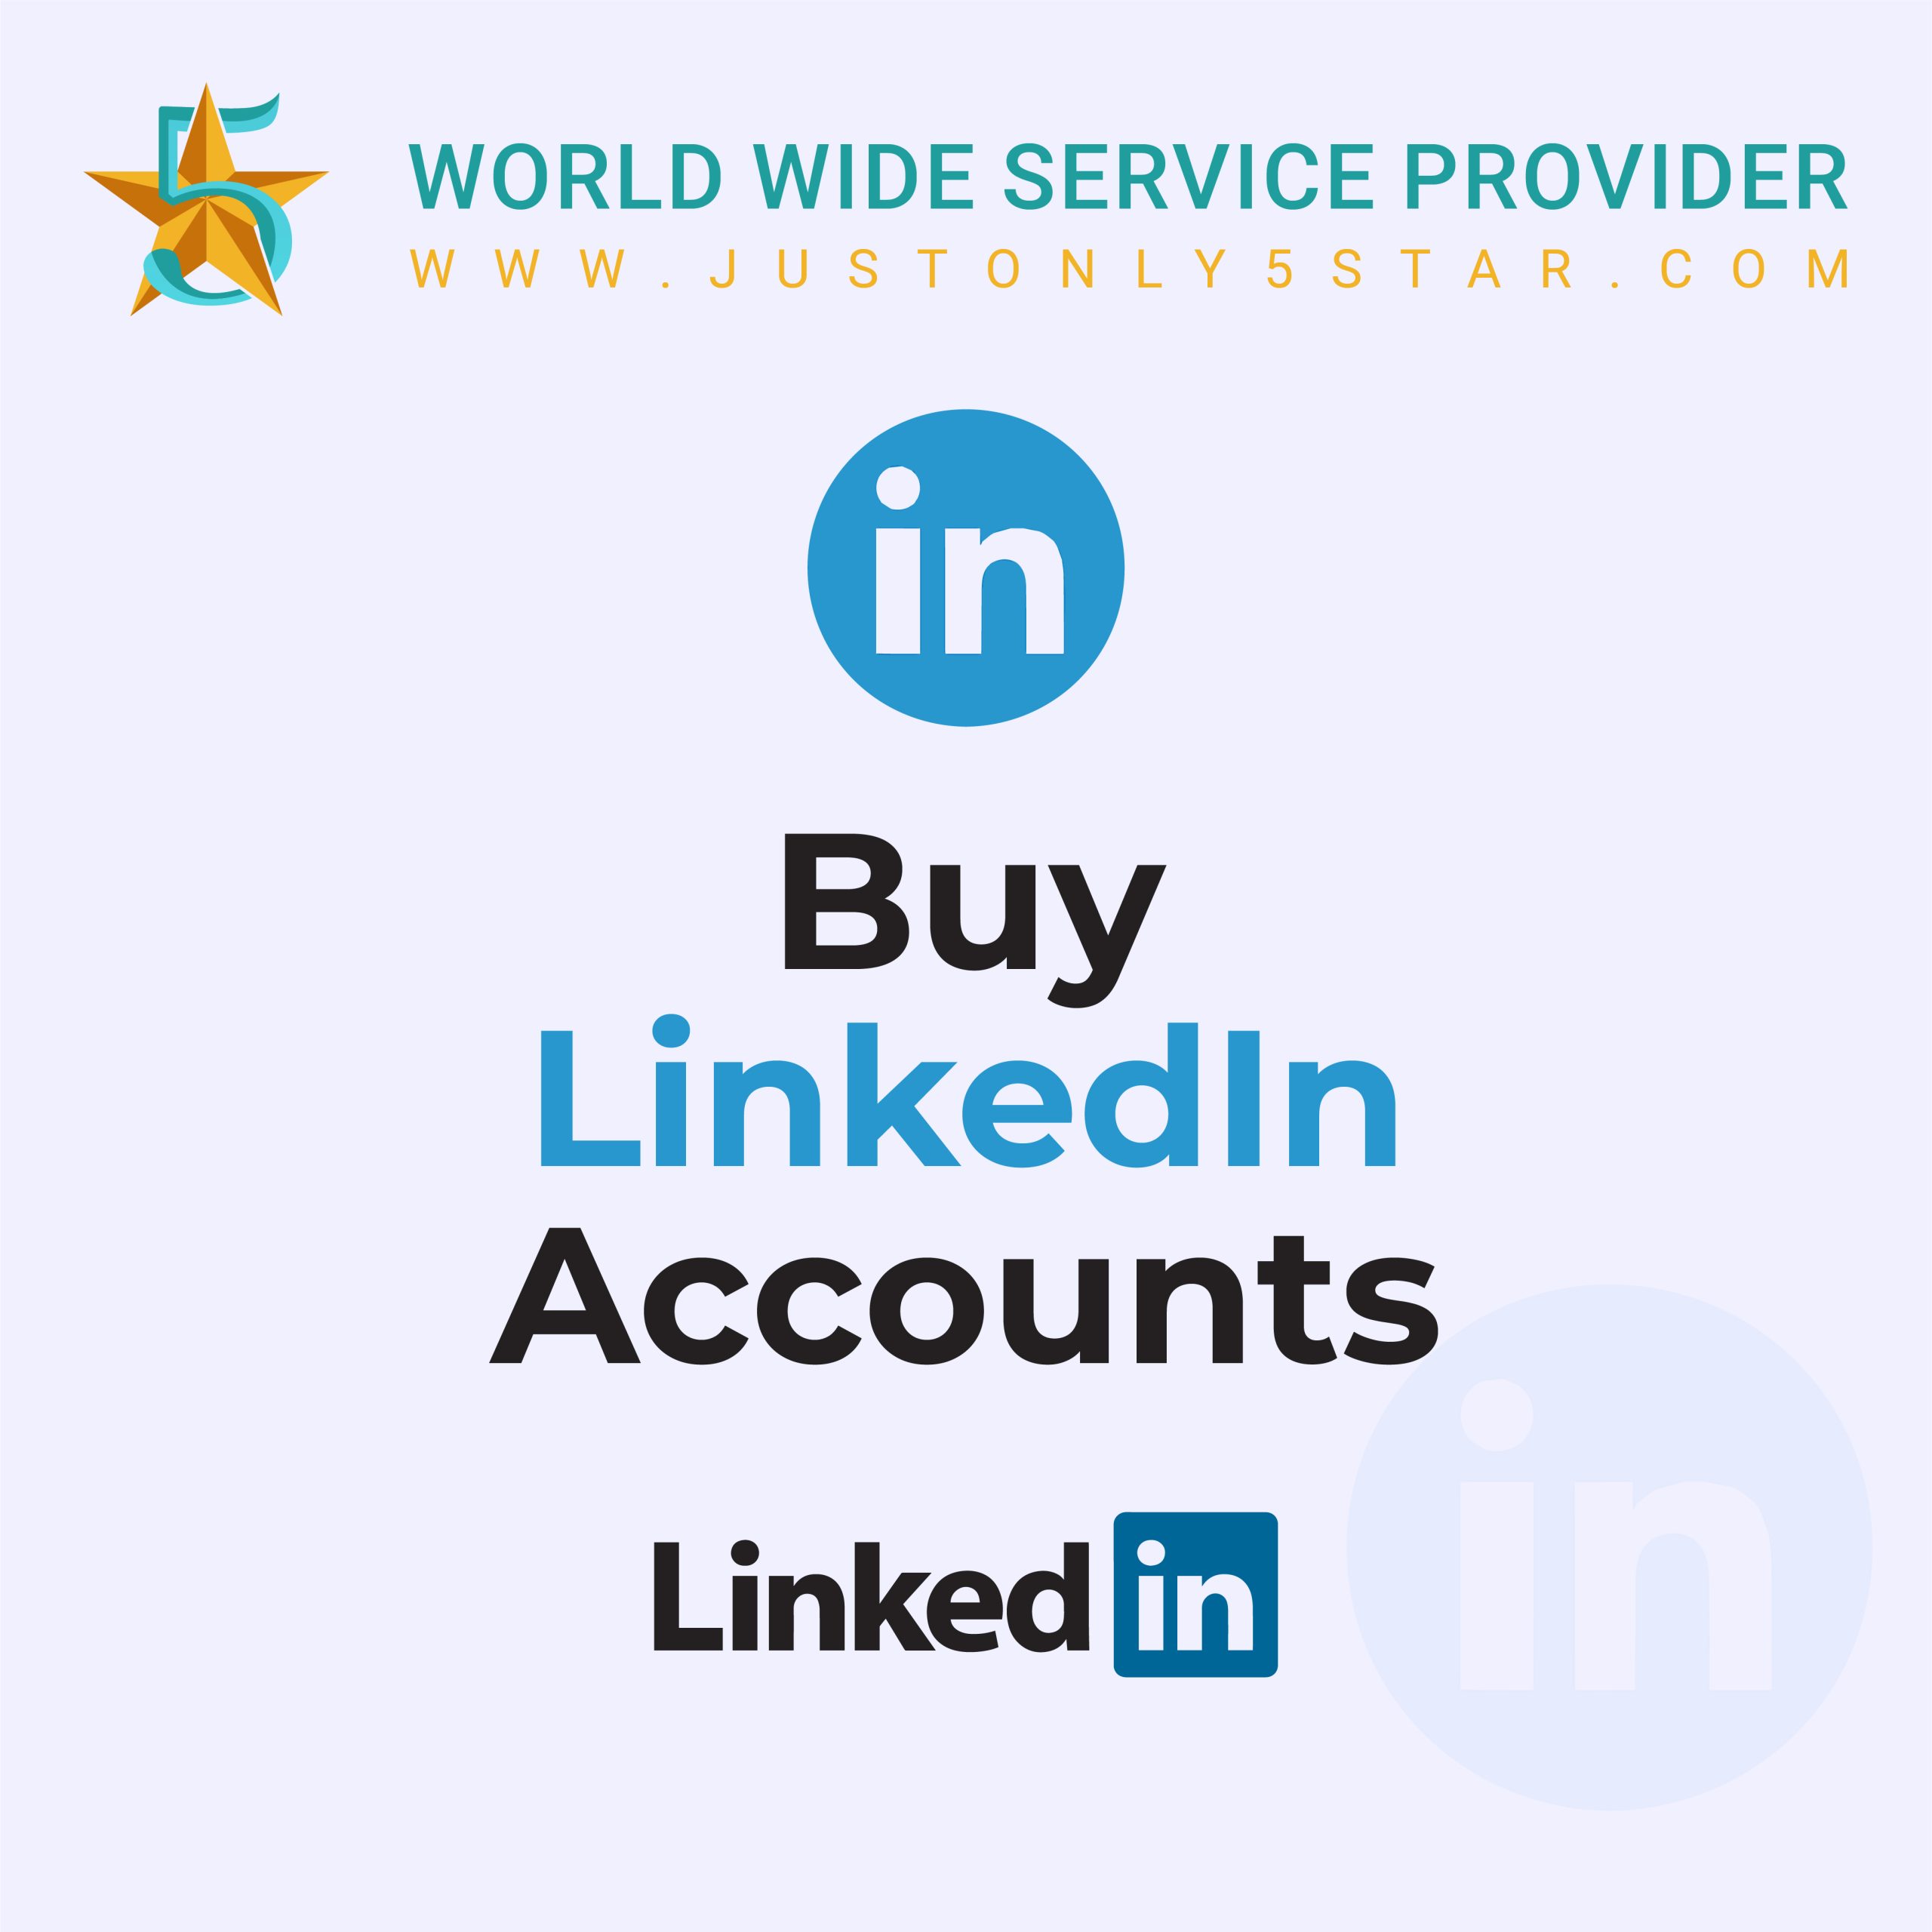 Buy LinkedIn Accounts - 100% Real, PVA, Verified, Bulk Accounts...